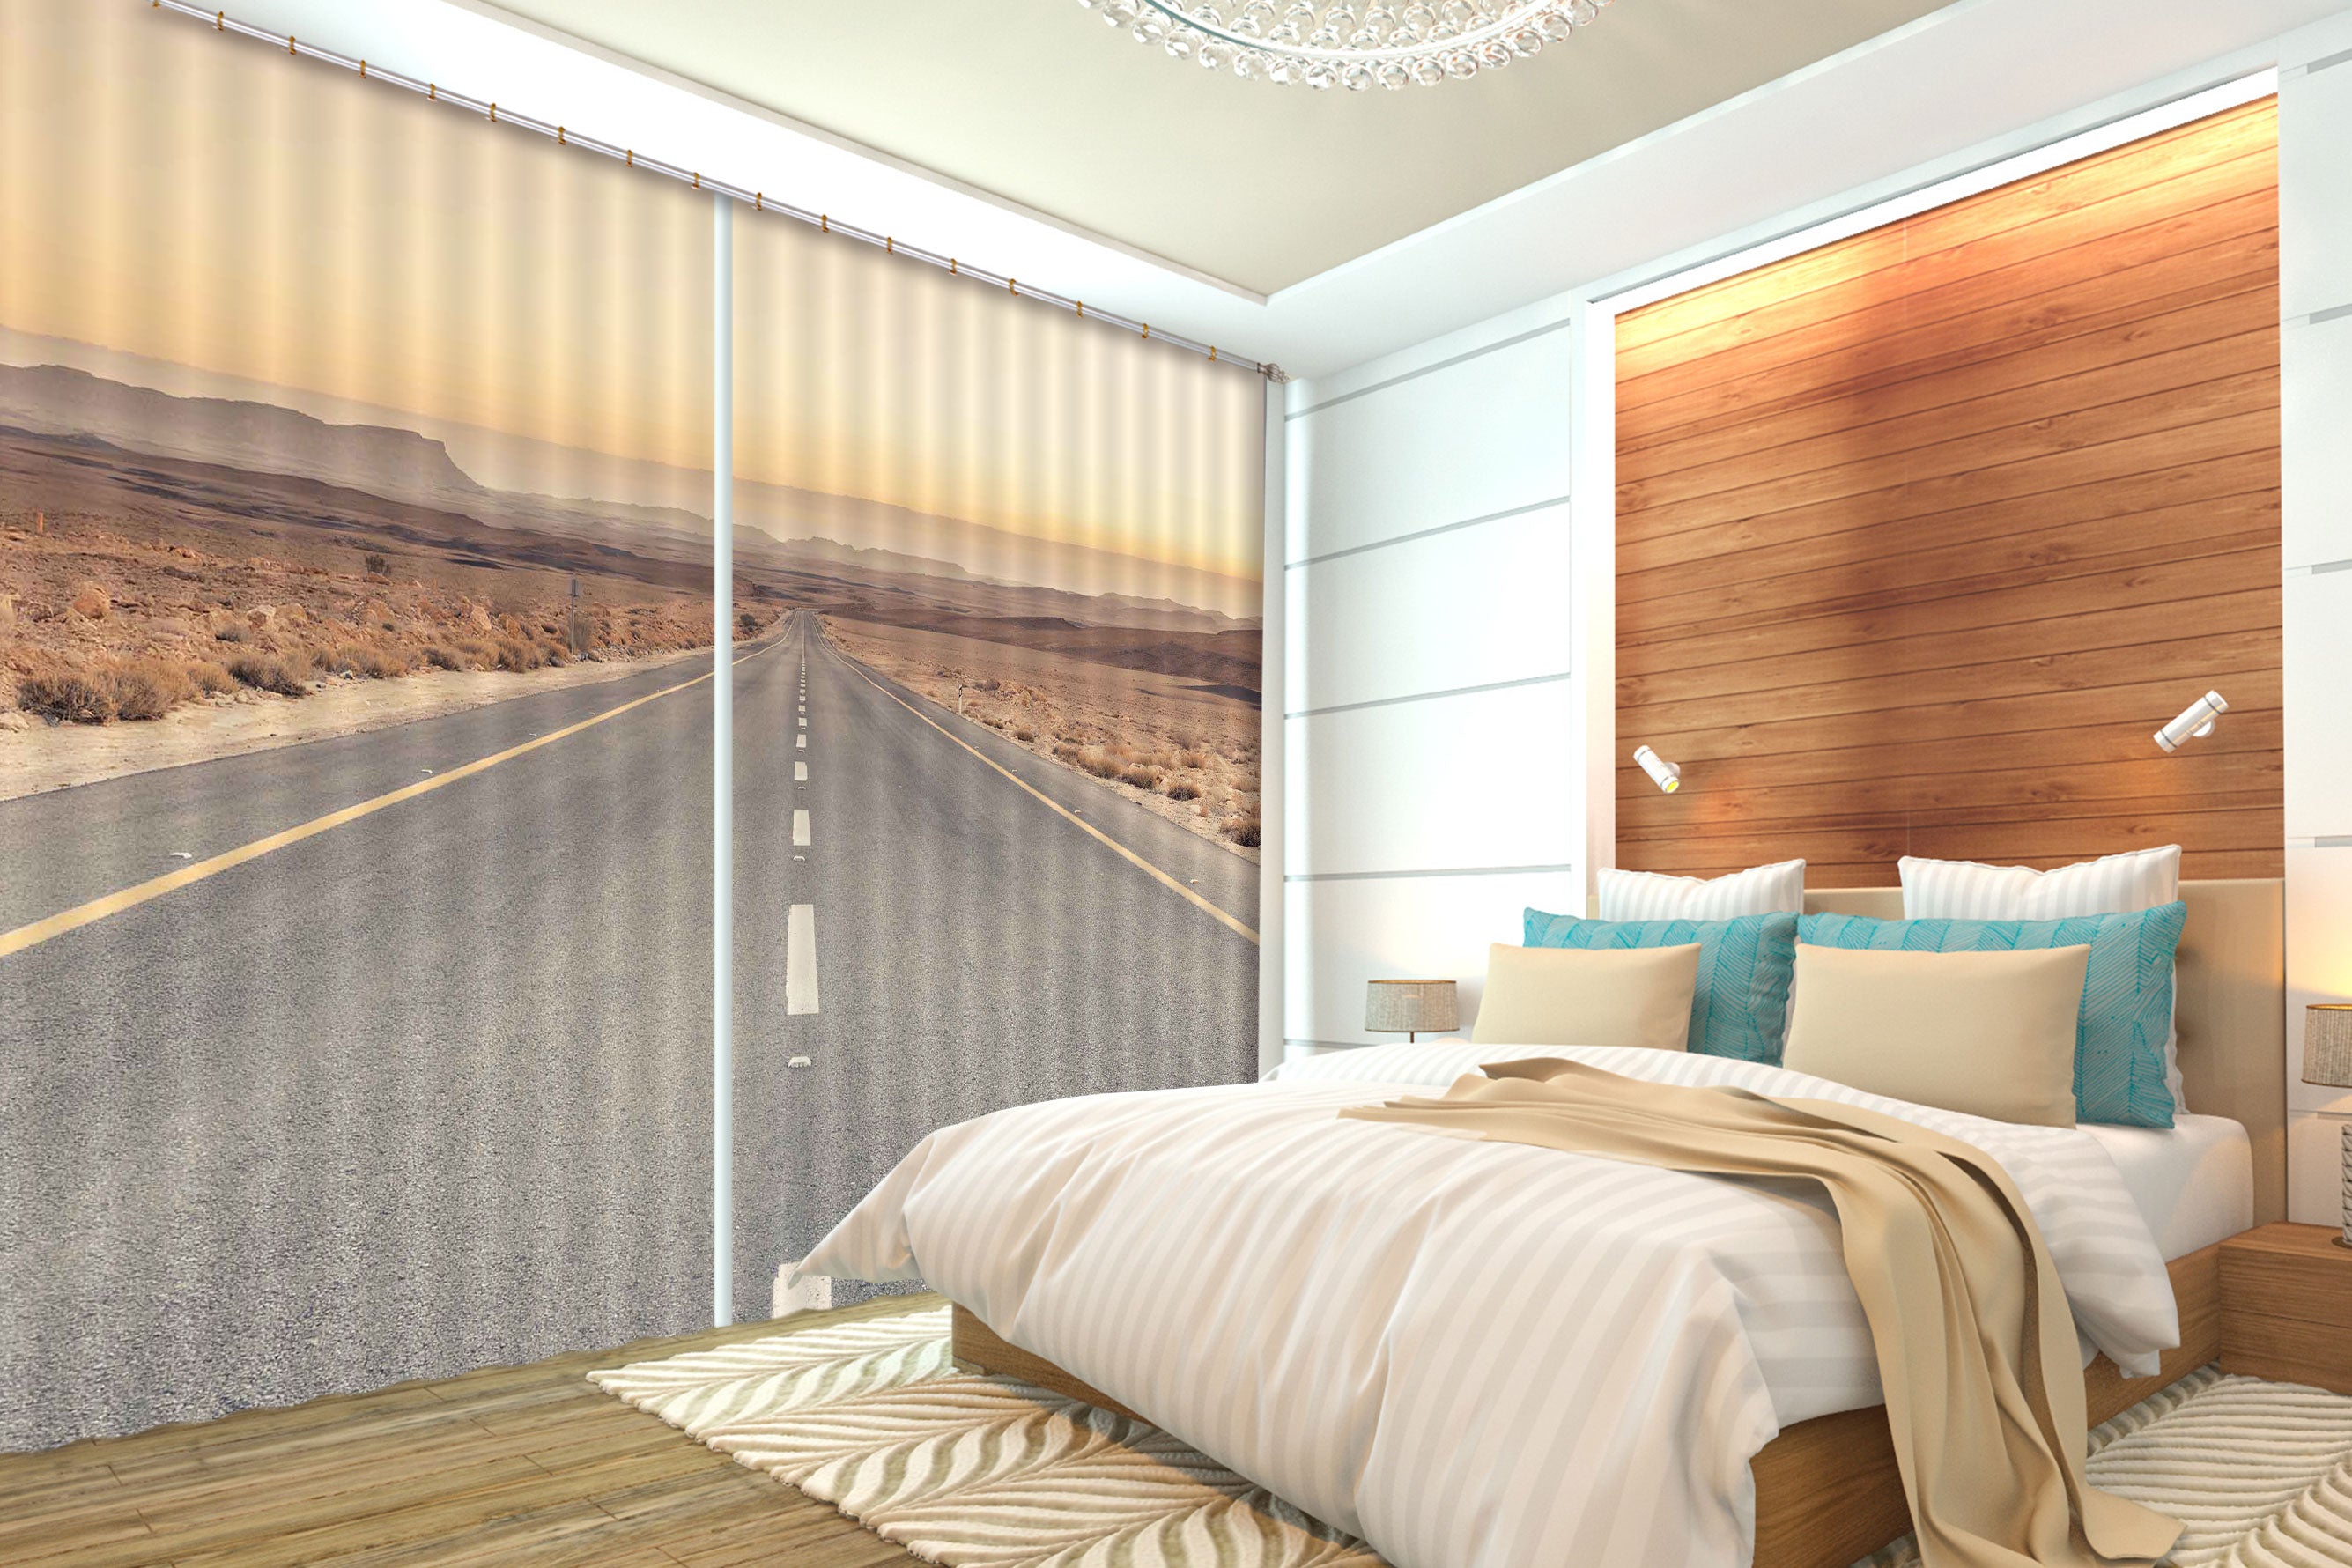 3D Prairie Highway 047 Assaf Frank Curtain Curtains Drapes